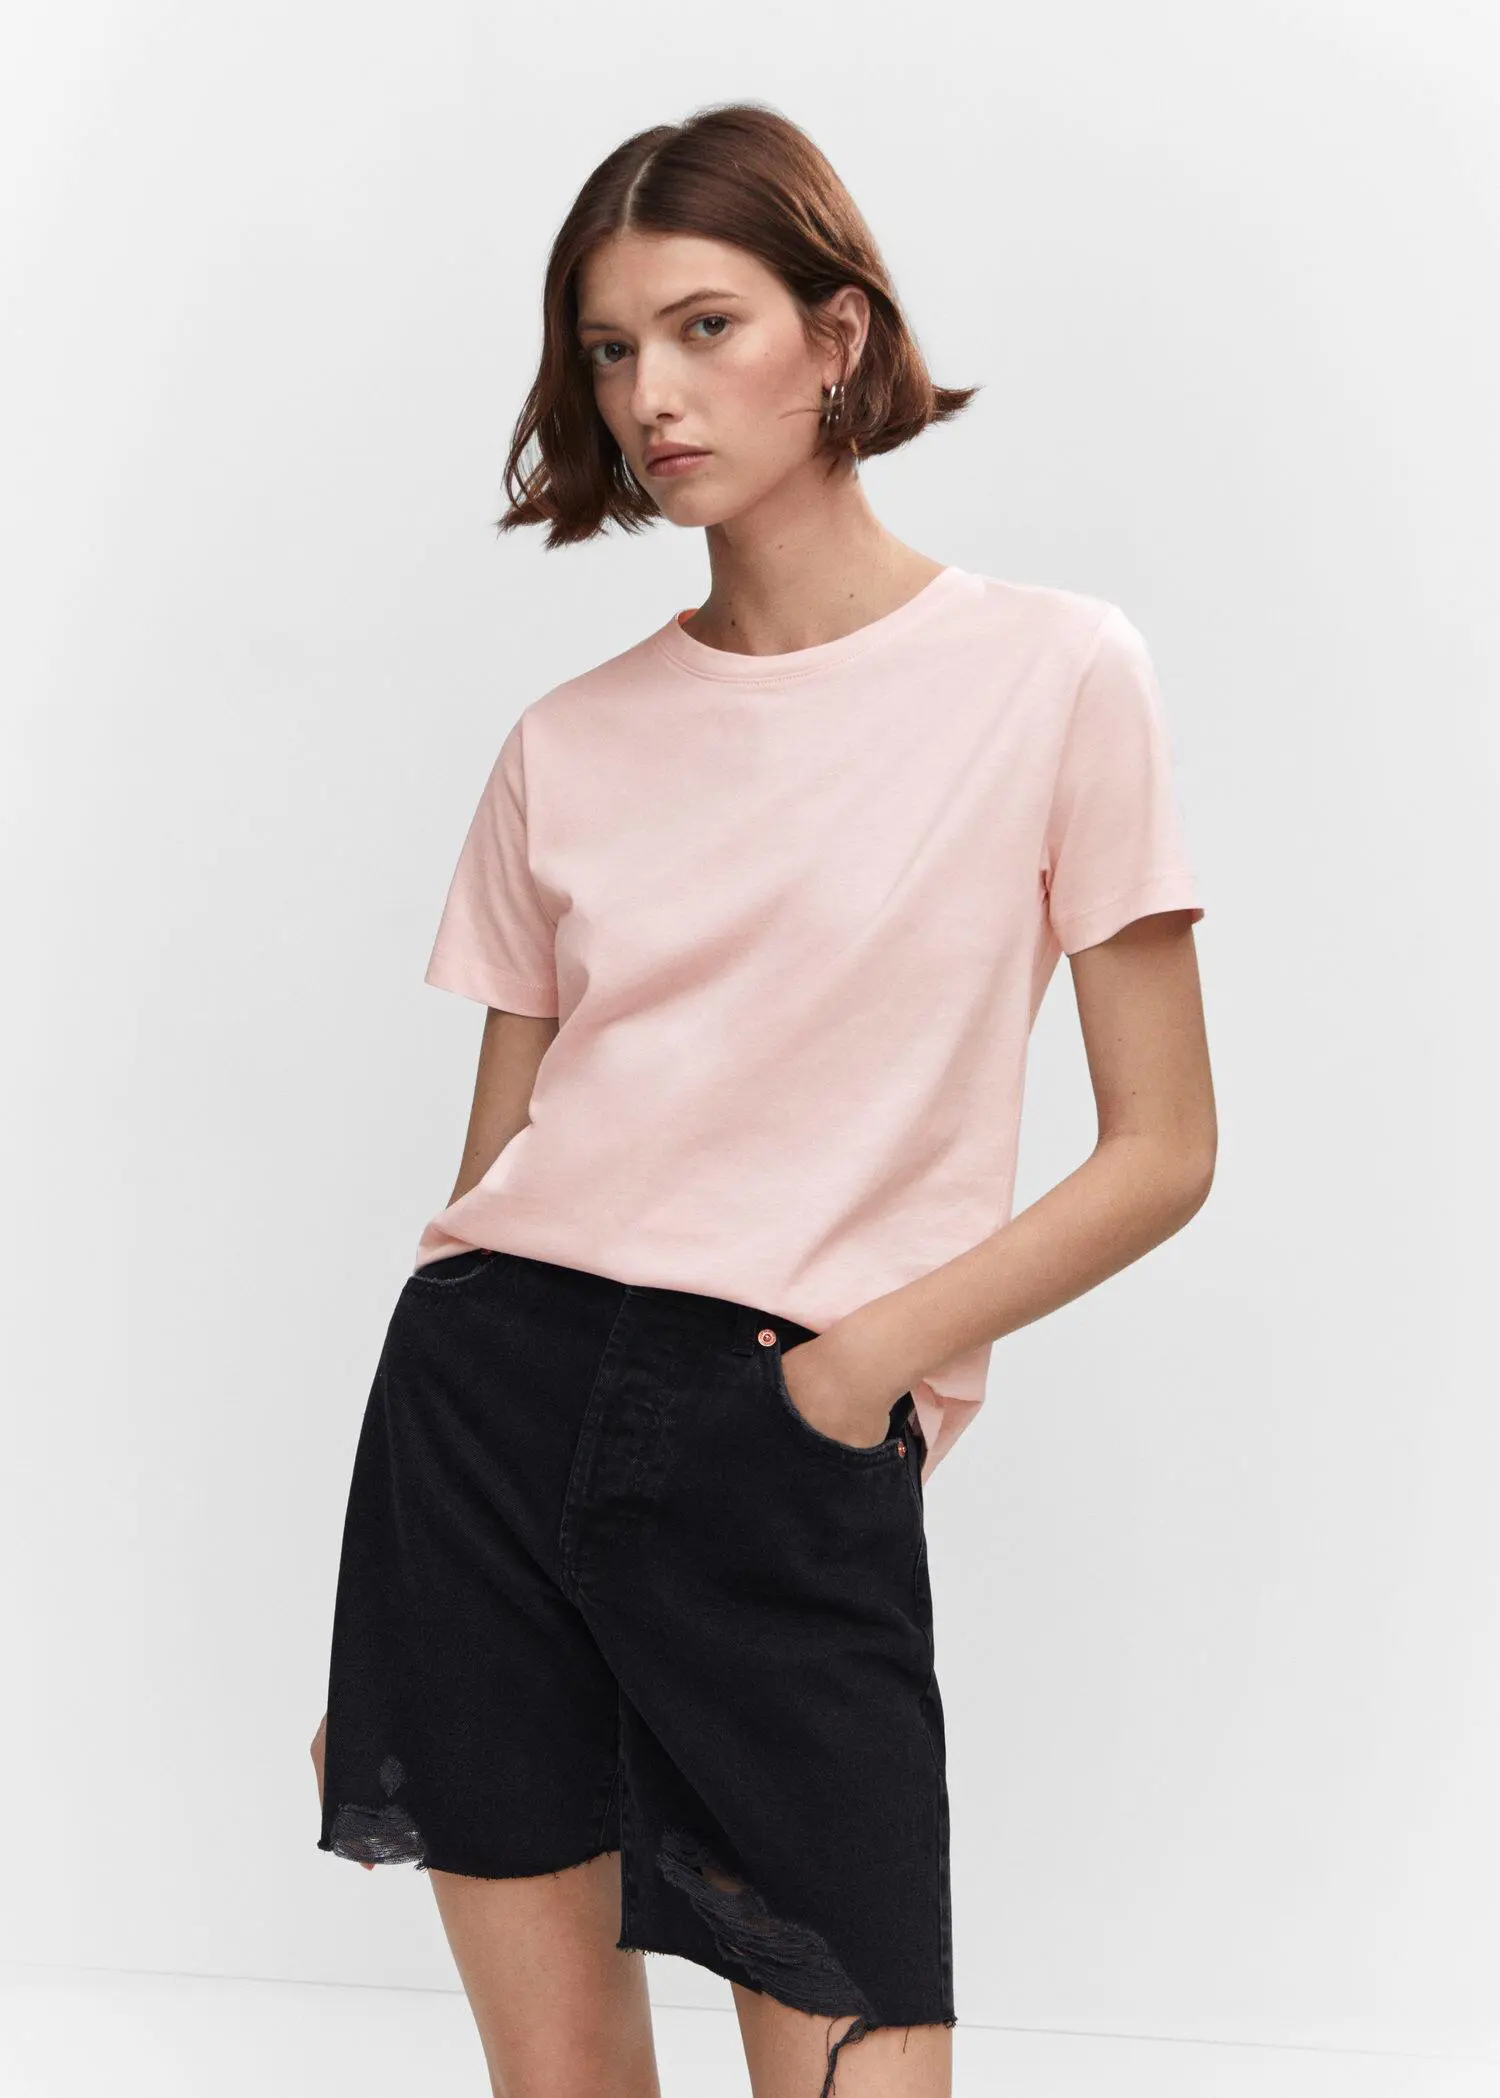 Mango 100% cotton T-shirt. a woman wearing black shorts and a light pink t-shirt. 